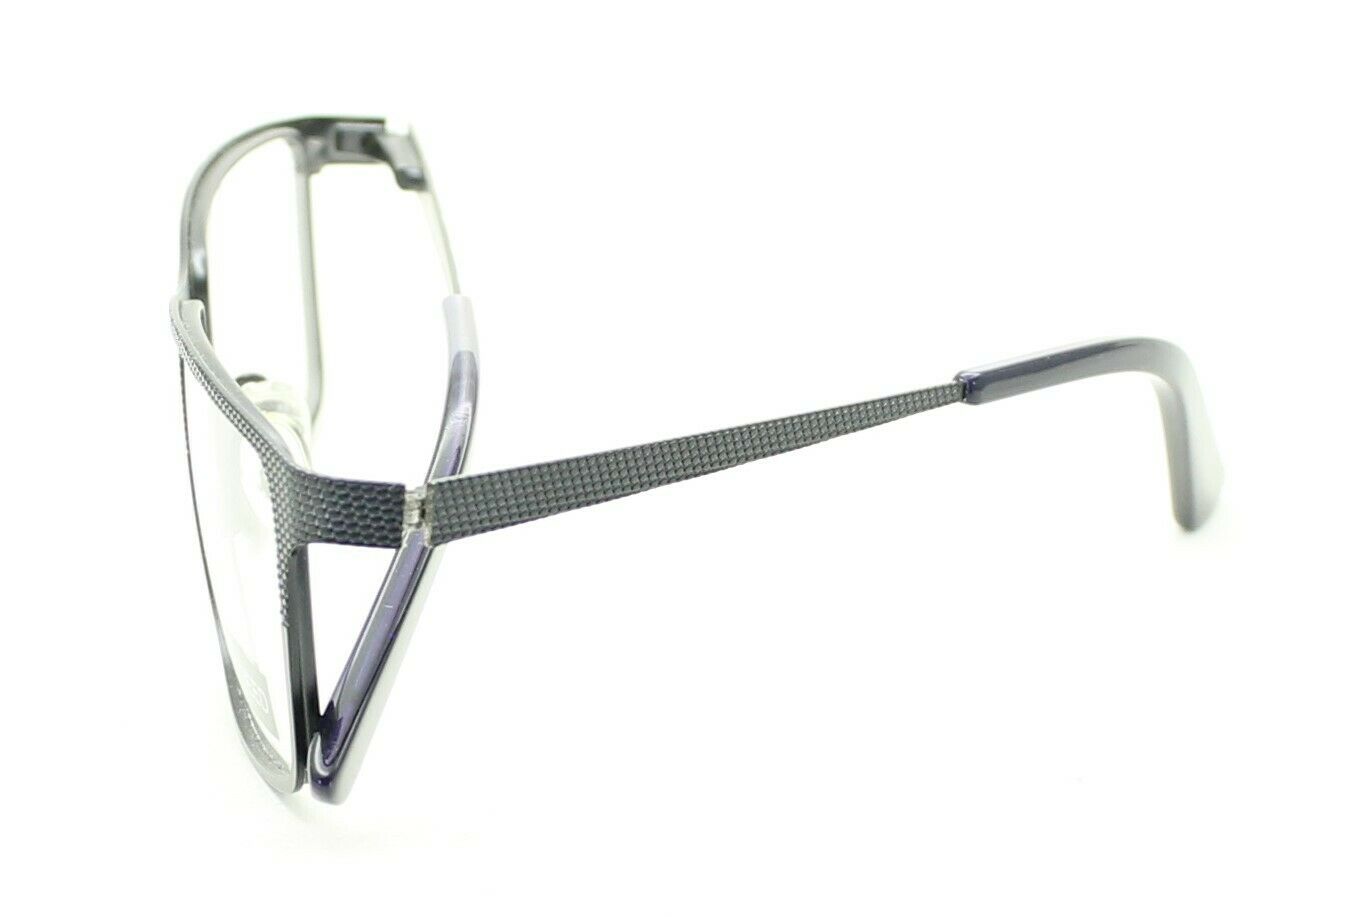 AUSTIN REED ENGLAND AR P07 Upminster 54mm Eyewear RX Optical FRAMES Glasses New